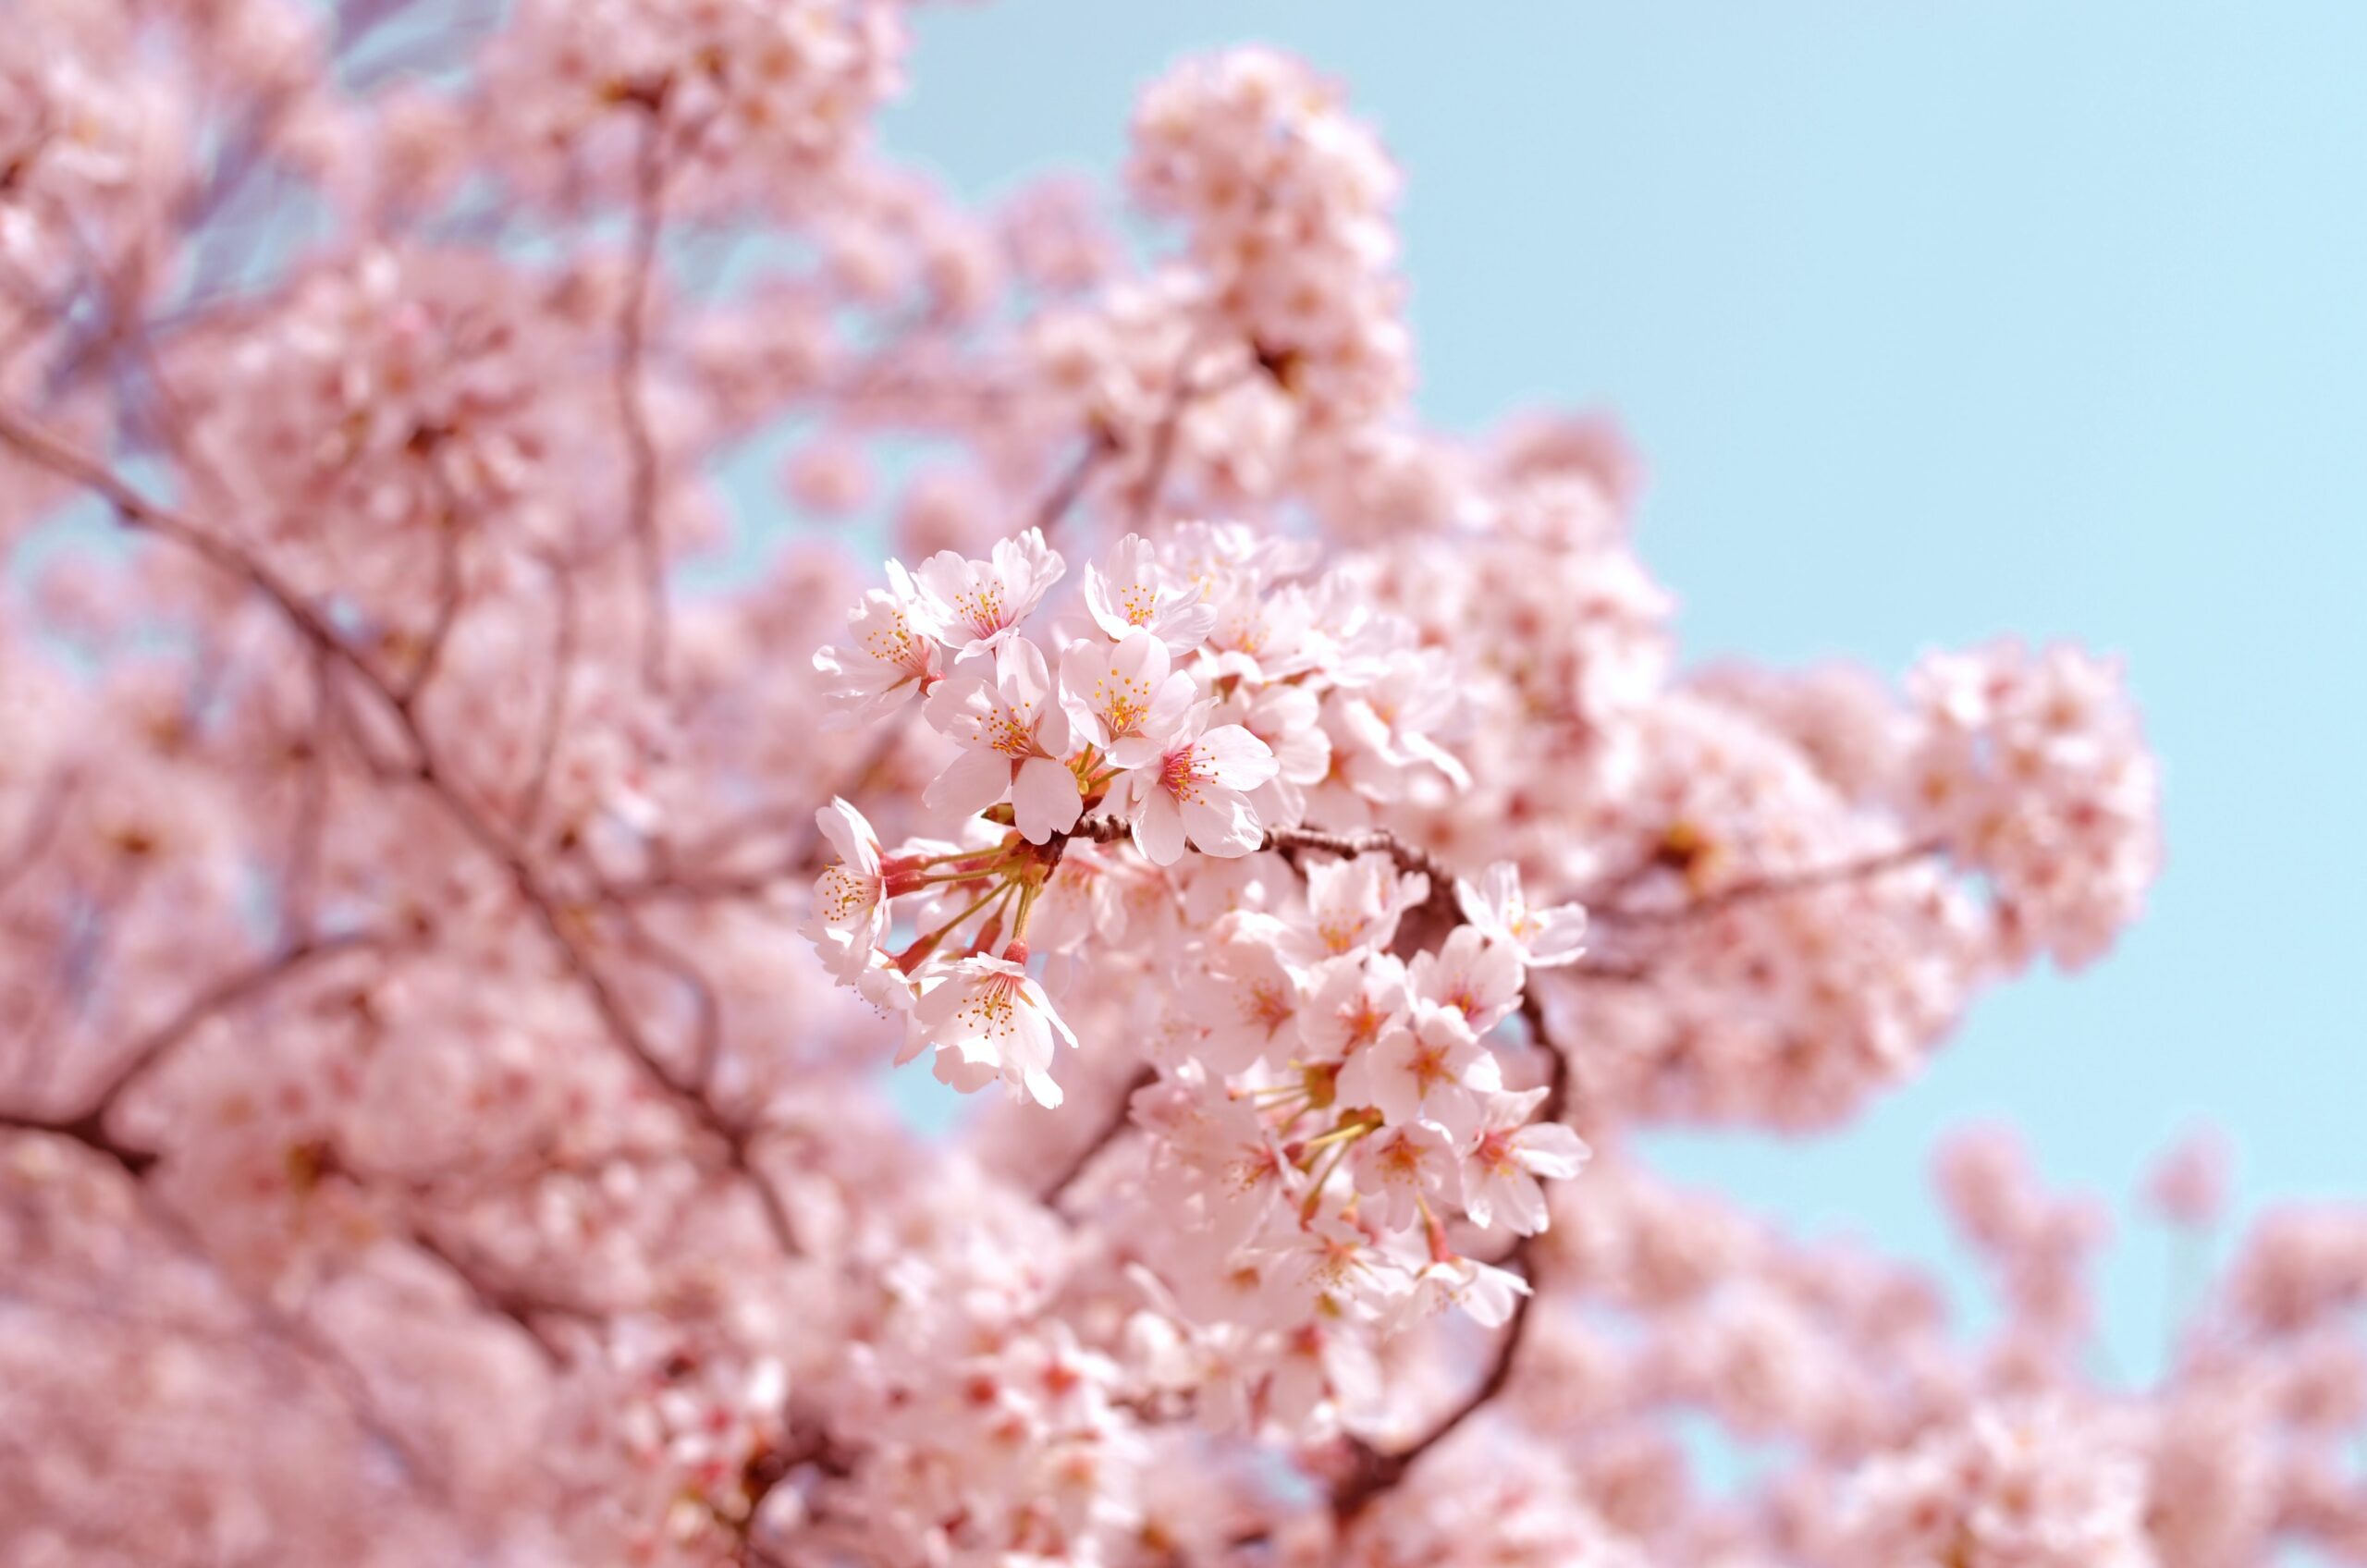 Cherry blossoms - a common image invoked in shinseikatsu new life support marketing campaigns.